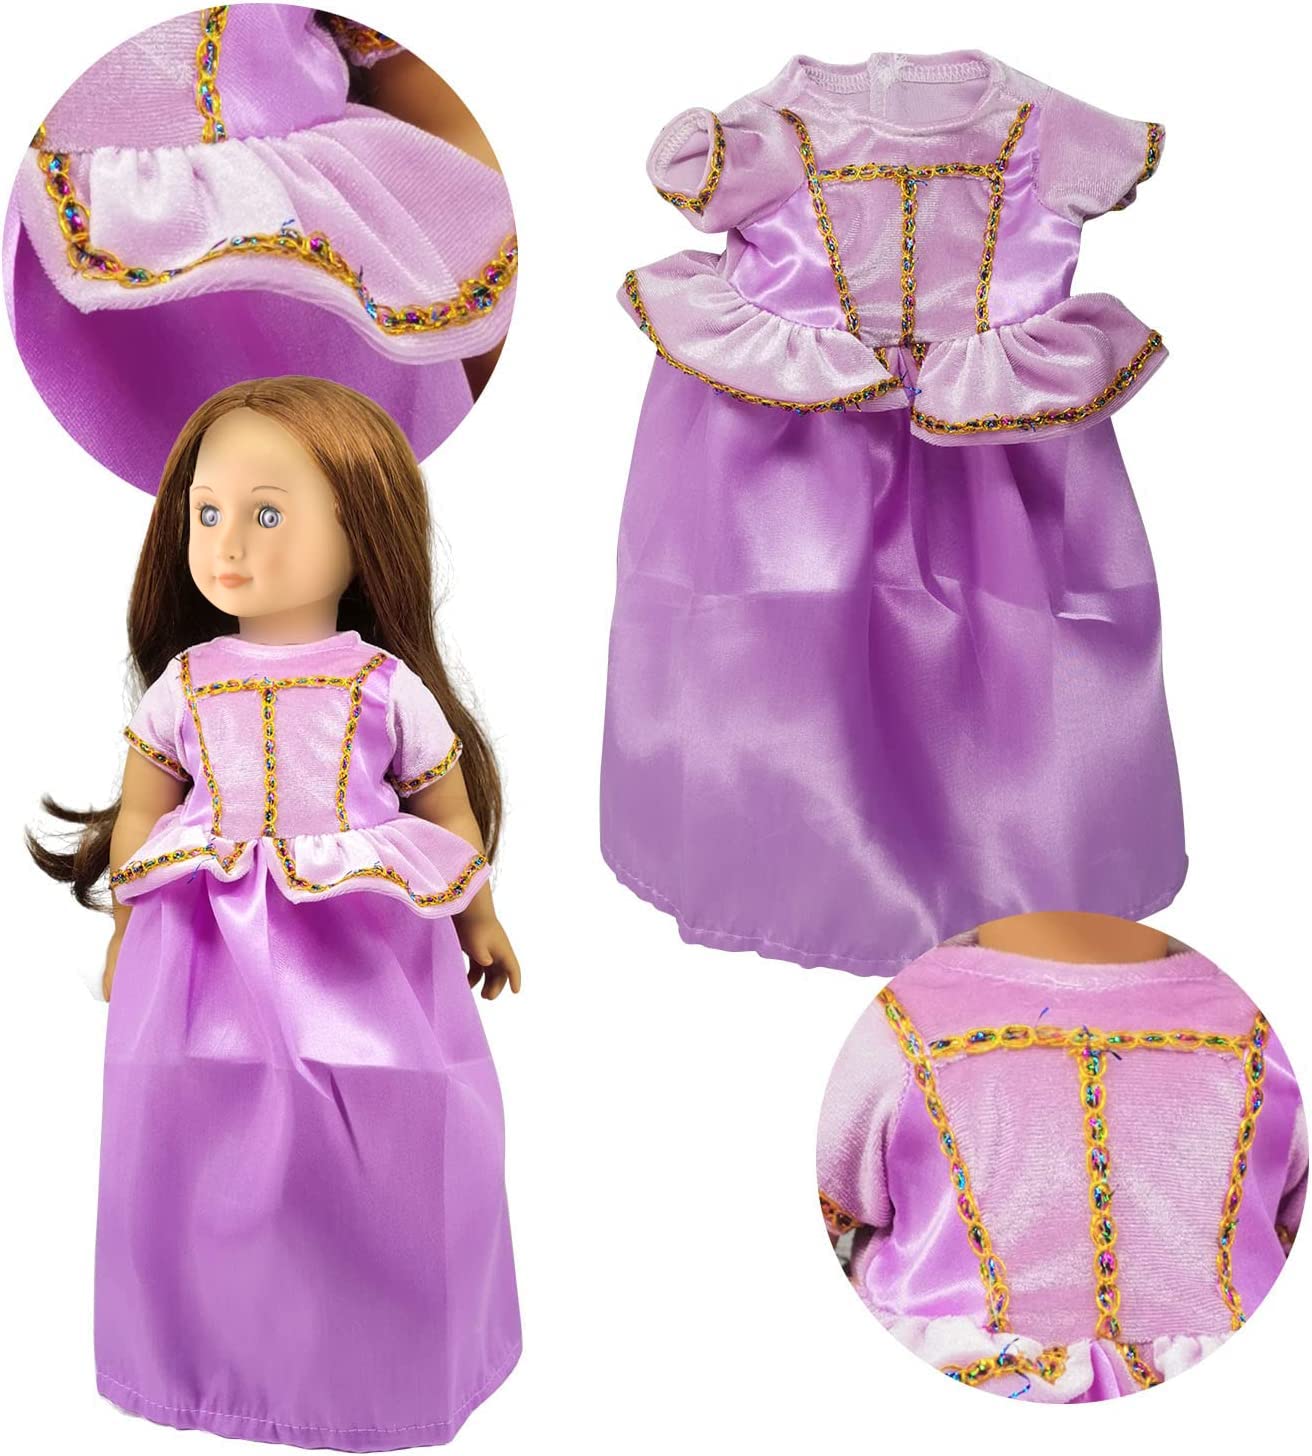 18 inch Doll Clothes ,6Pcs Princess Costume Include Bella,Cinderella,Snow White,Rapunzel,Princess Elsa and Aurora Fits All 18 inch Girl Dolls